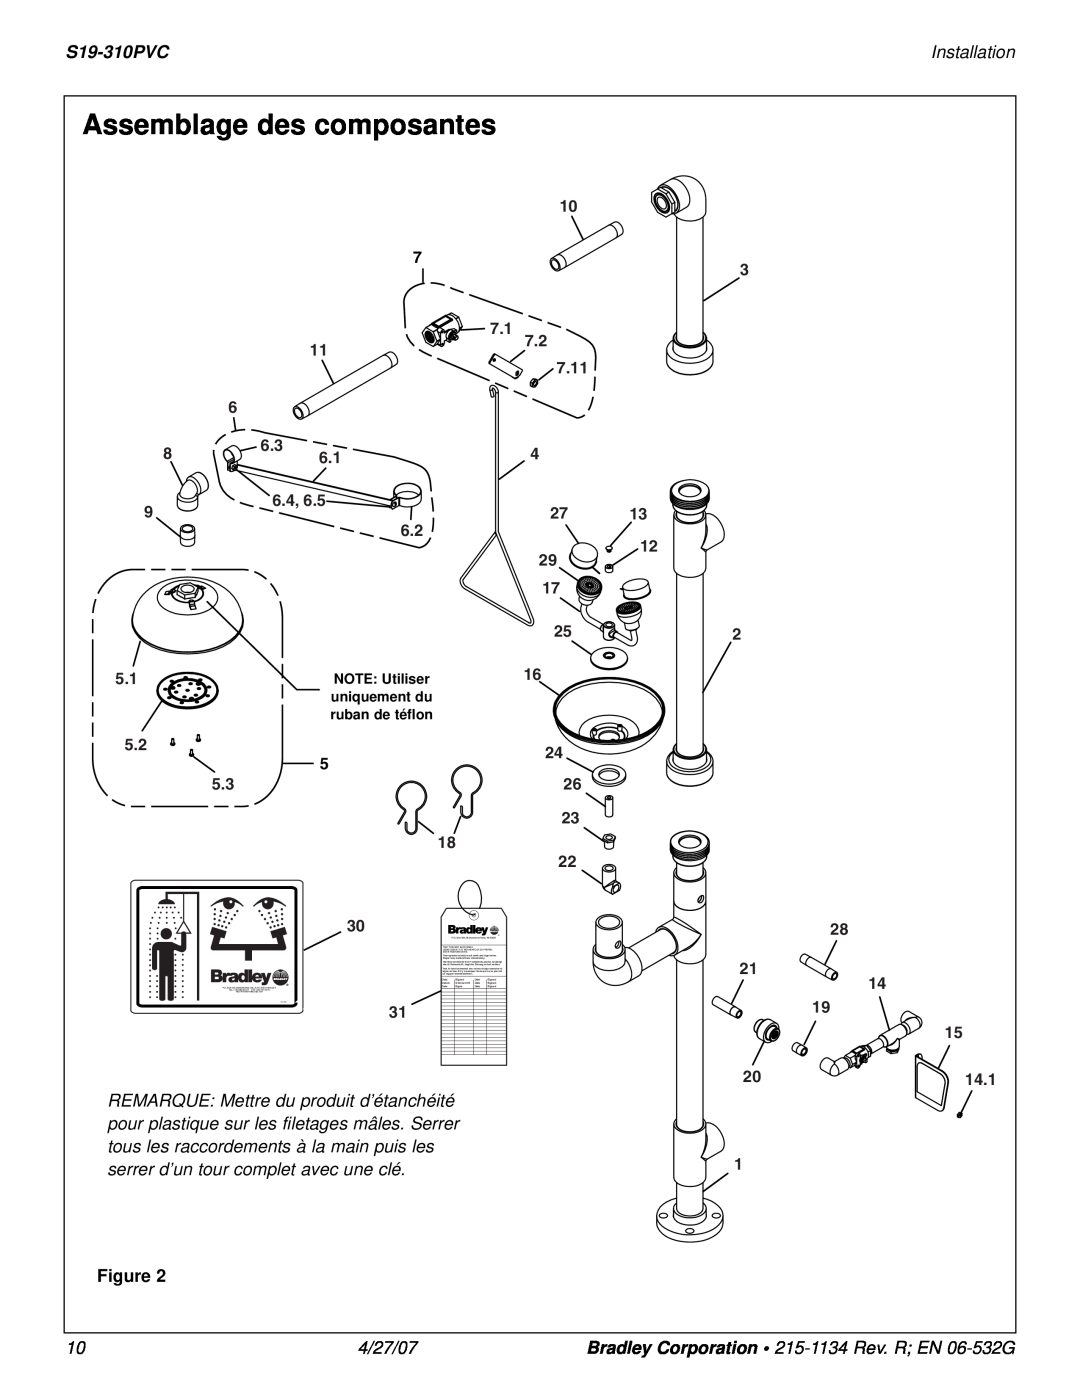 Bradley Smoker S19-310PVC Assemblage des composantes, Installation, 4/27/07, 7.2 7.11, 14.1, NOTE Utiliser 